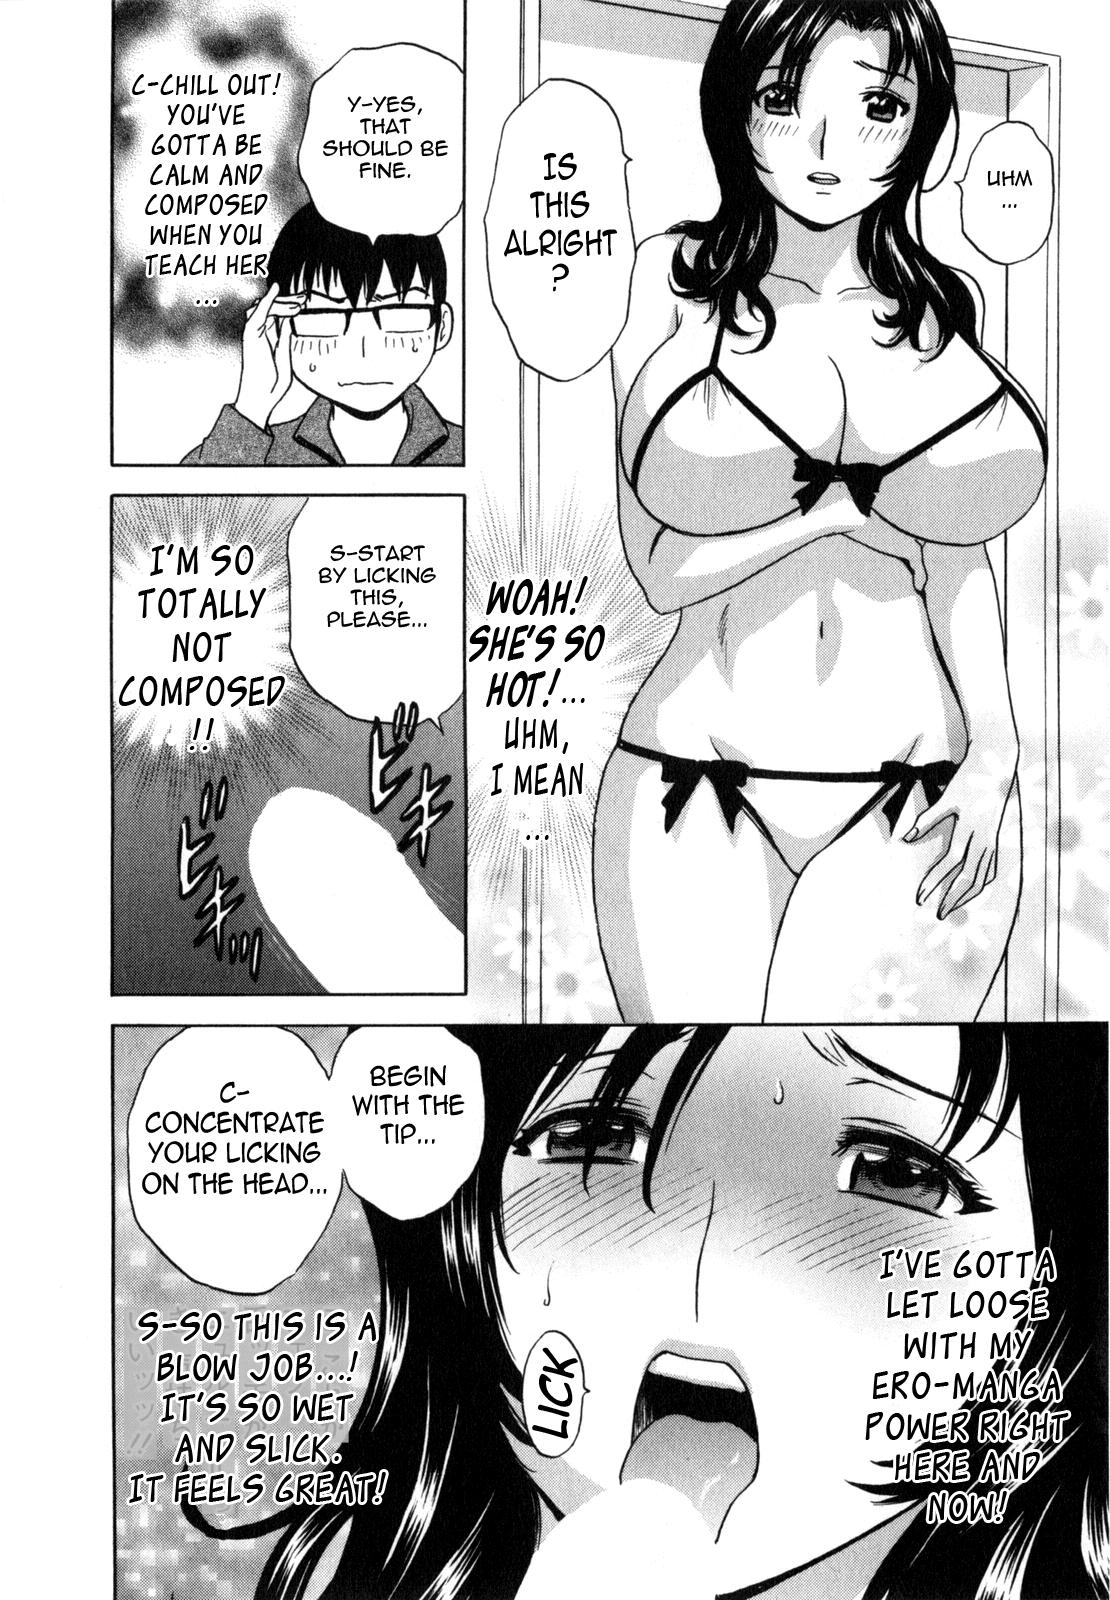 [Hidemaru] Life with Married Women Just Like a Manga 1 - Ch. 1-5 [English] {Tadanohito} 16